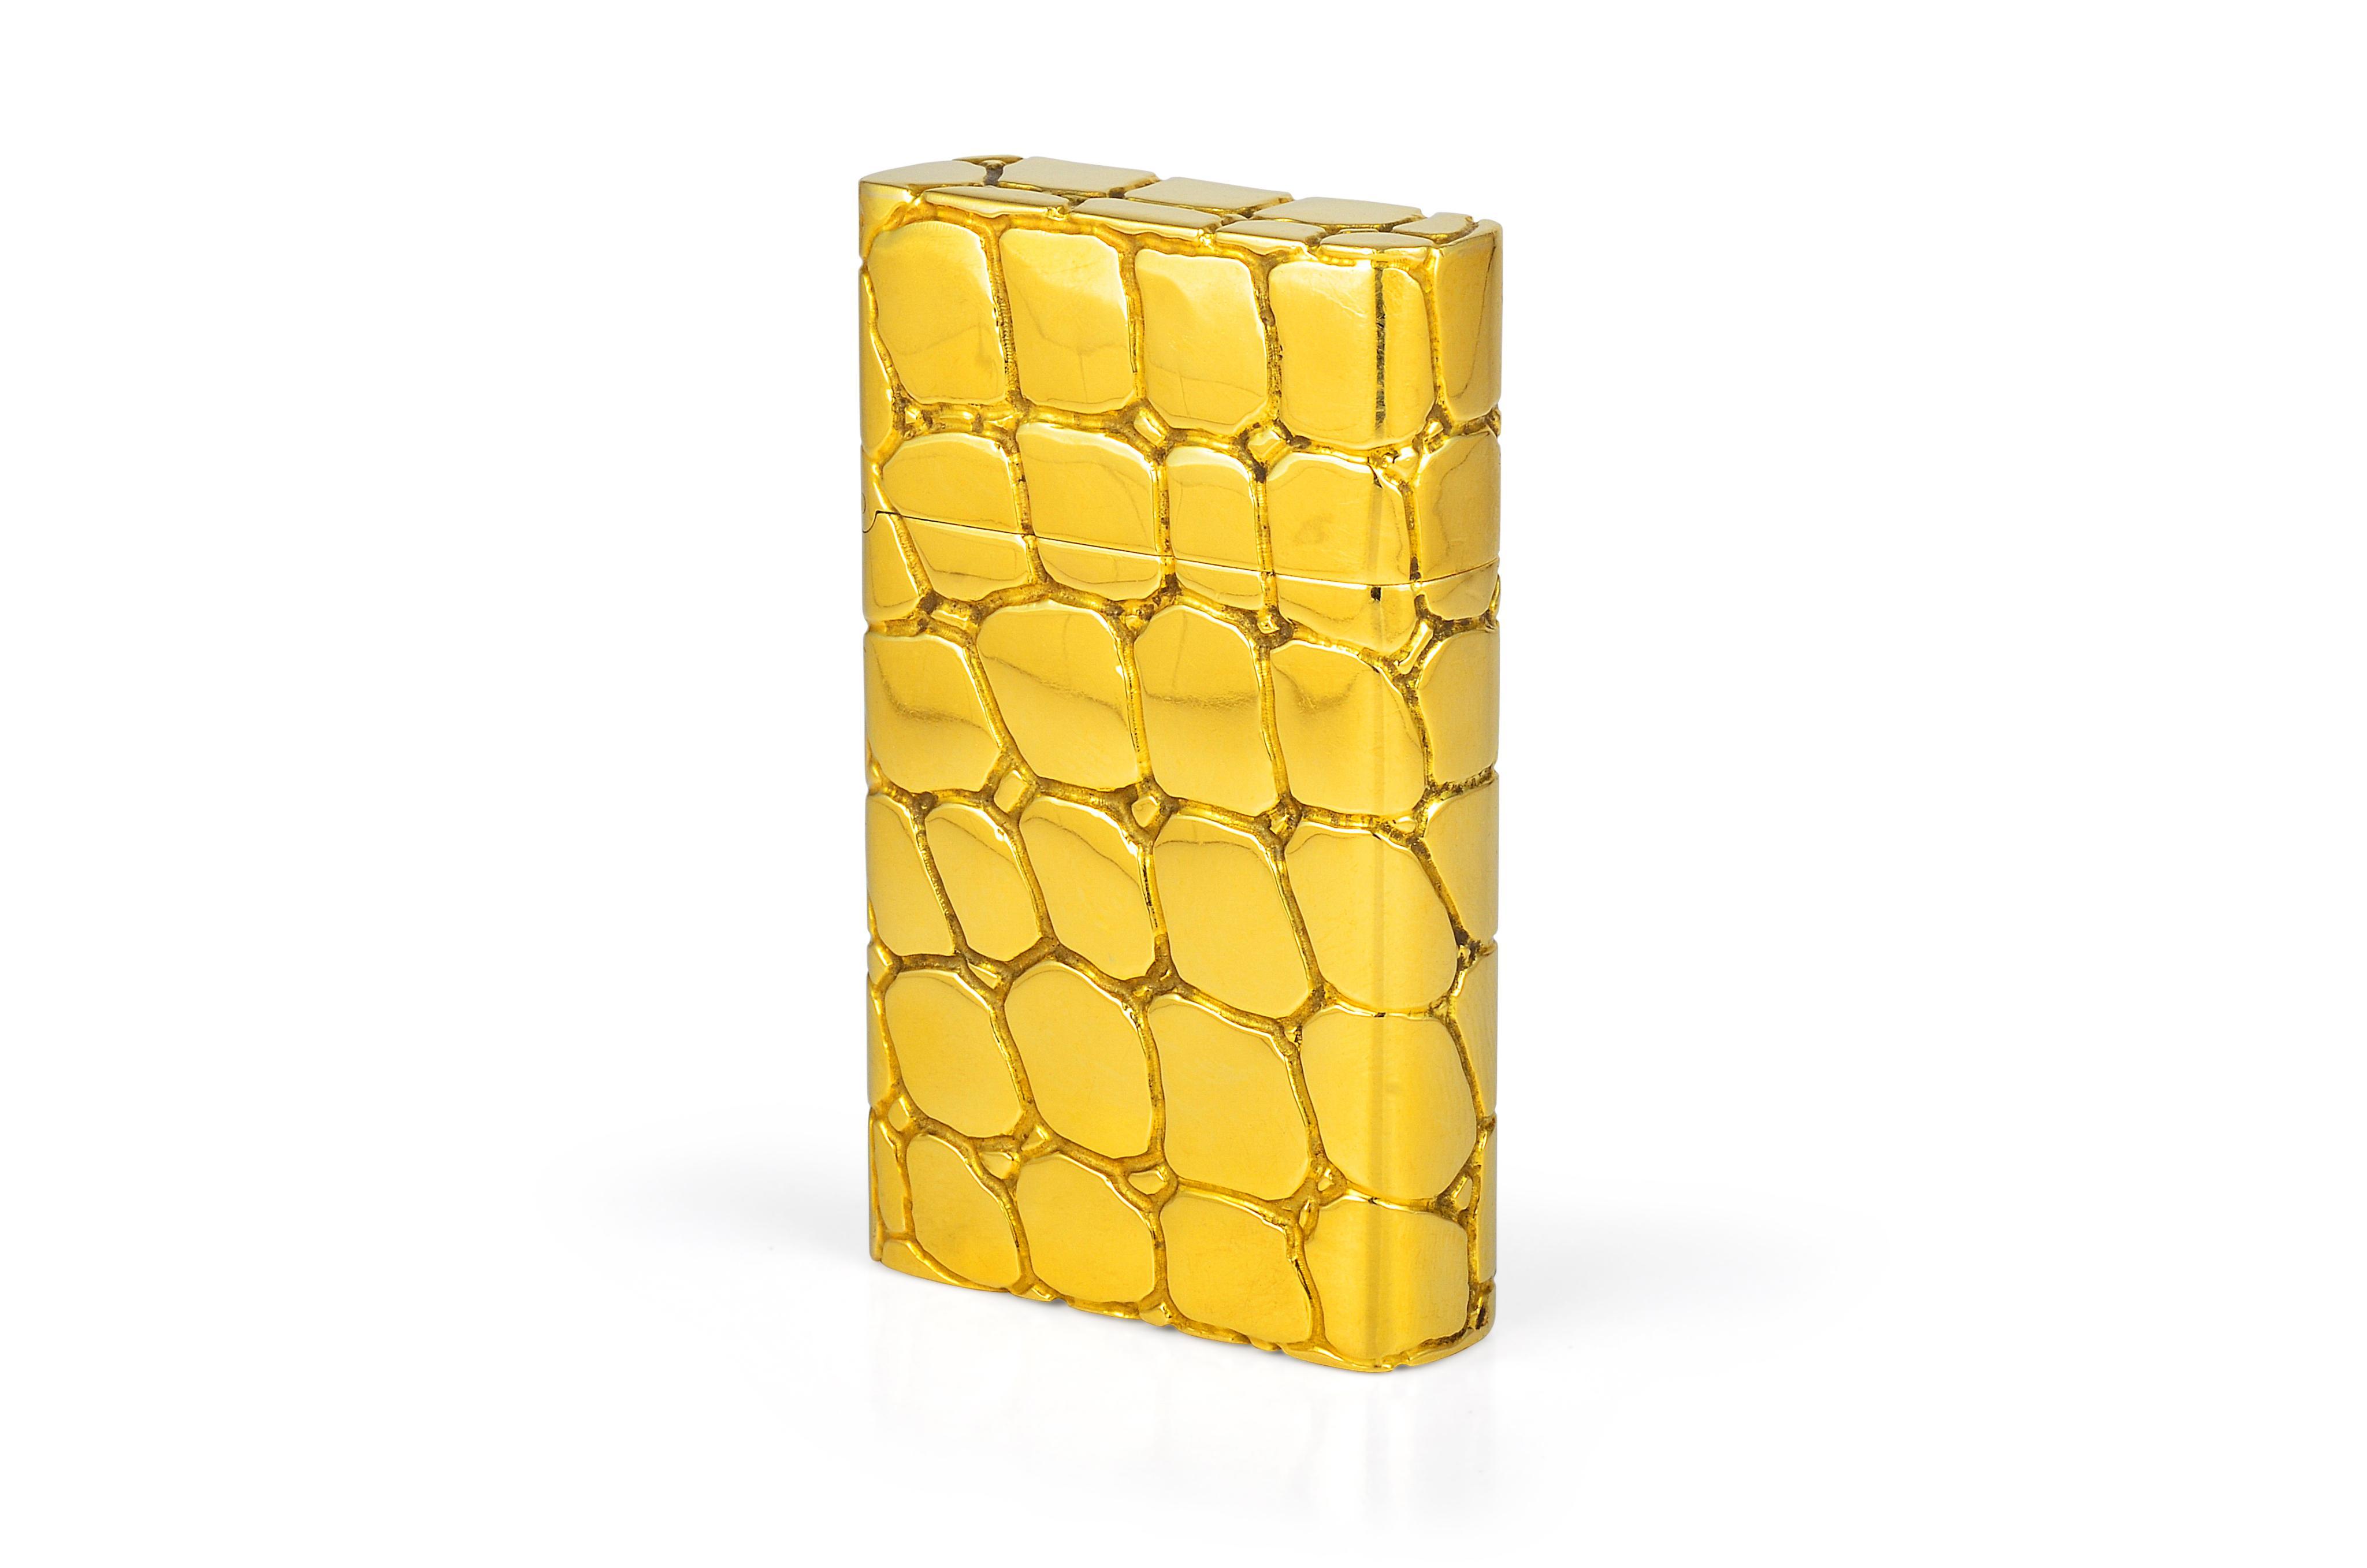 bvlgari 18k gold lighter